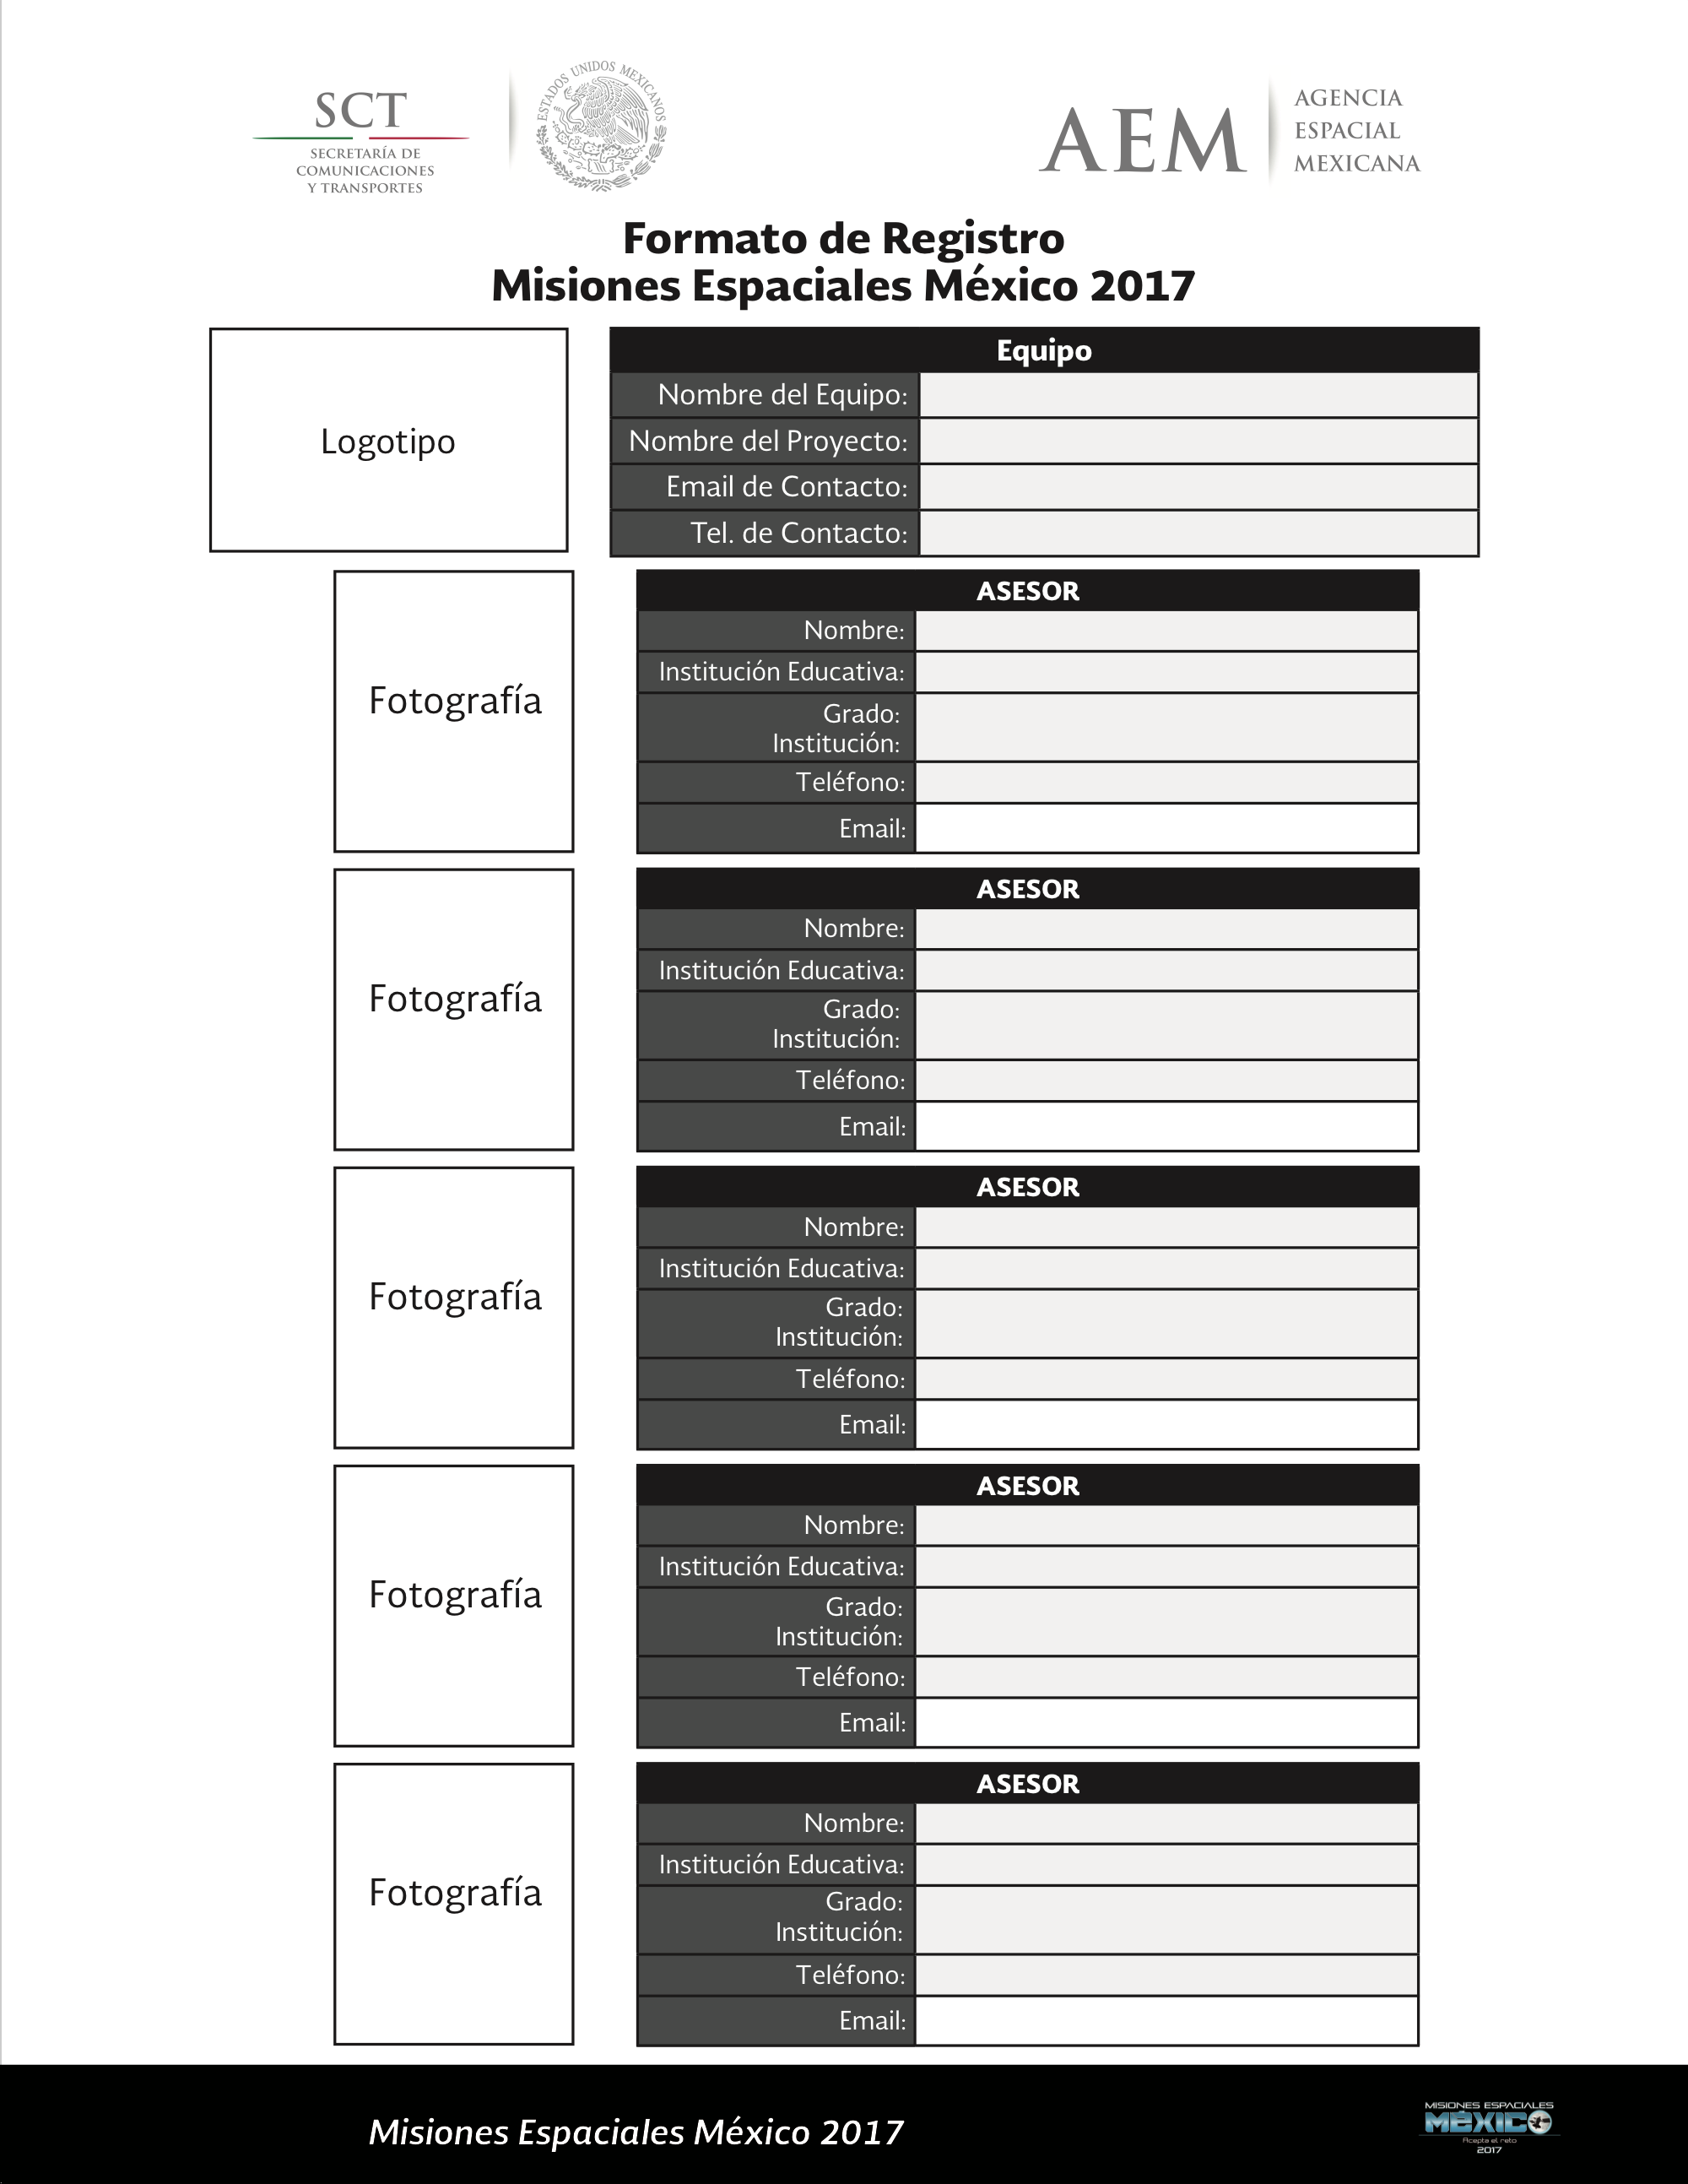 Documento Anexo formato de registro para dosmildiezysiete en pdf